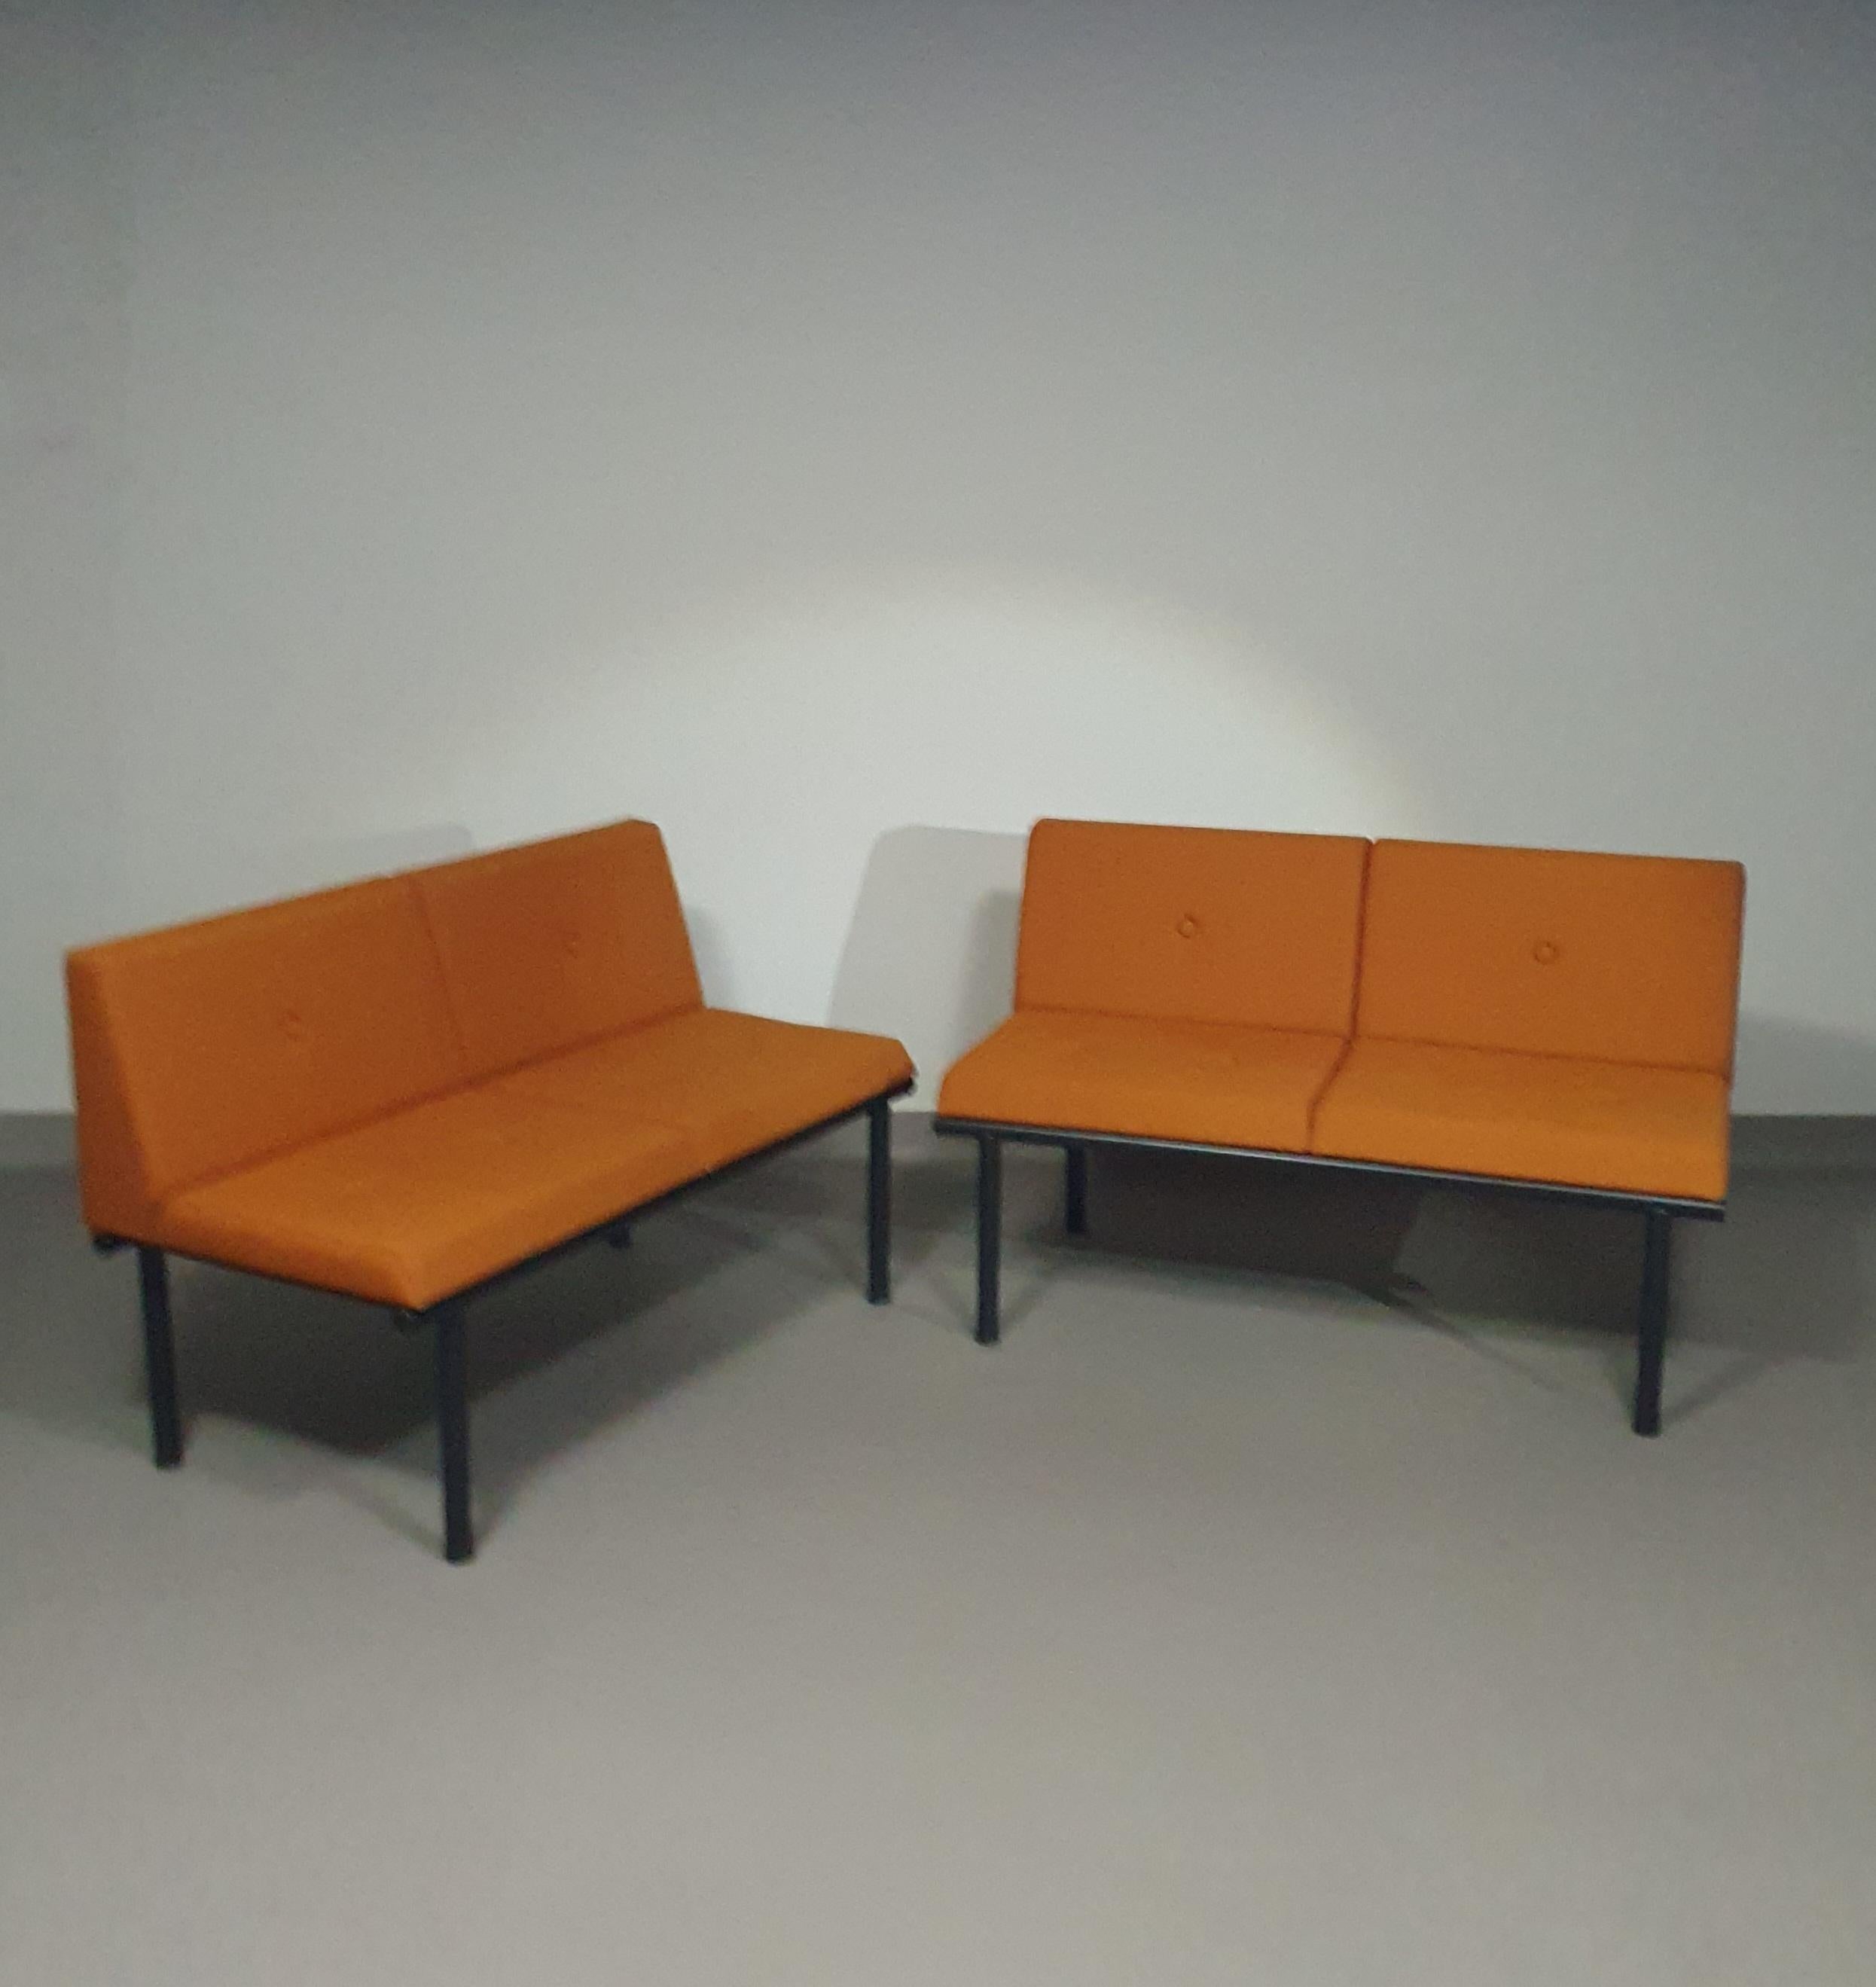  Bas Pruyser bench / sofa 2 x for Ahrend / De Cirkel 90s  For Sale 4